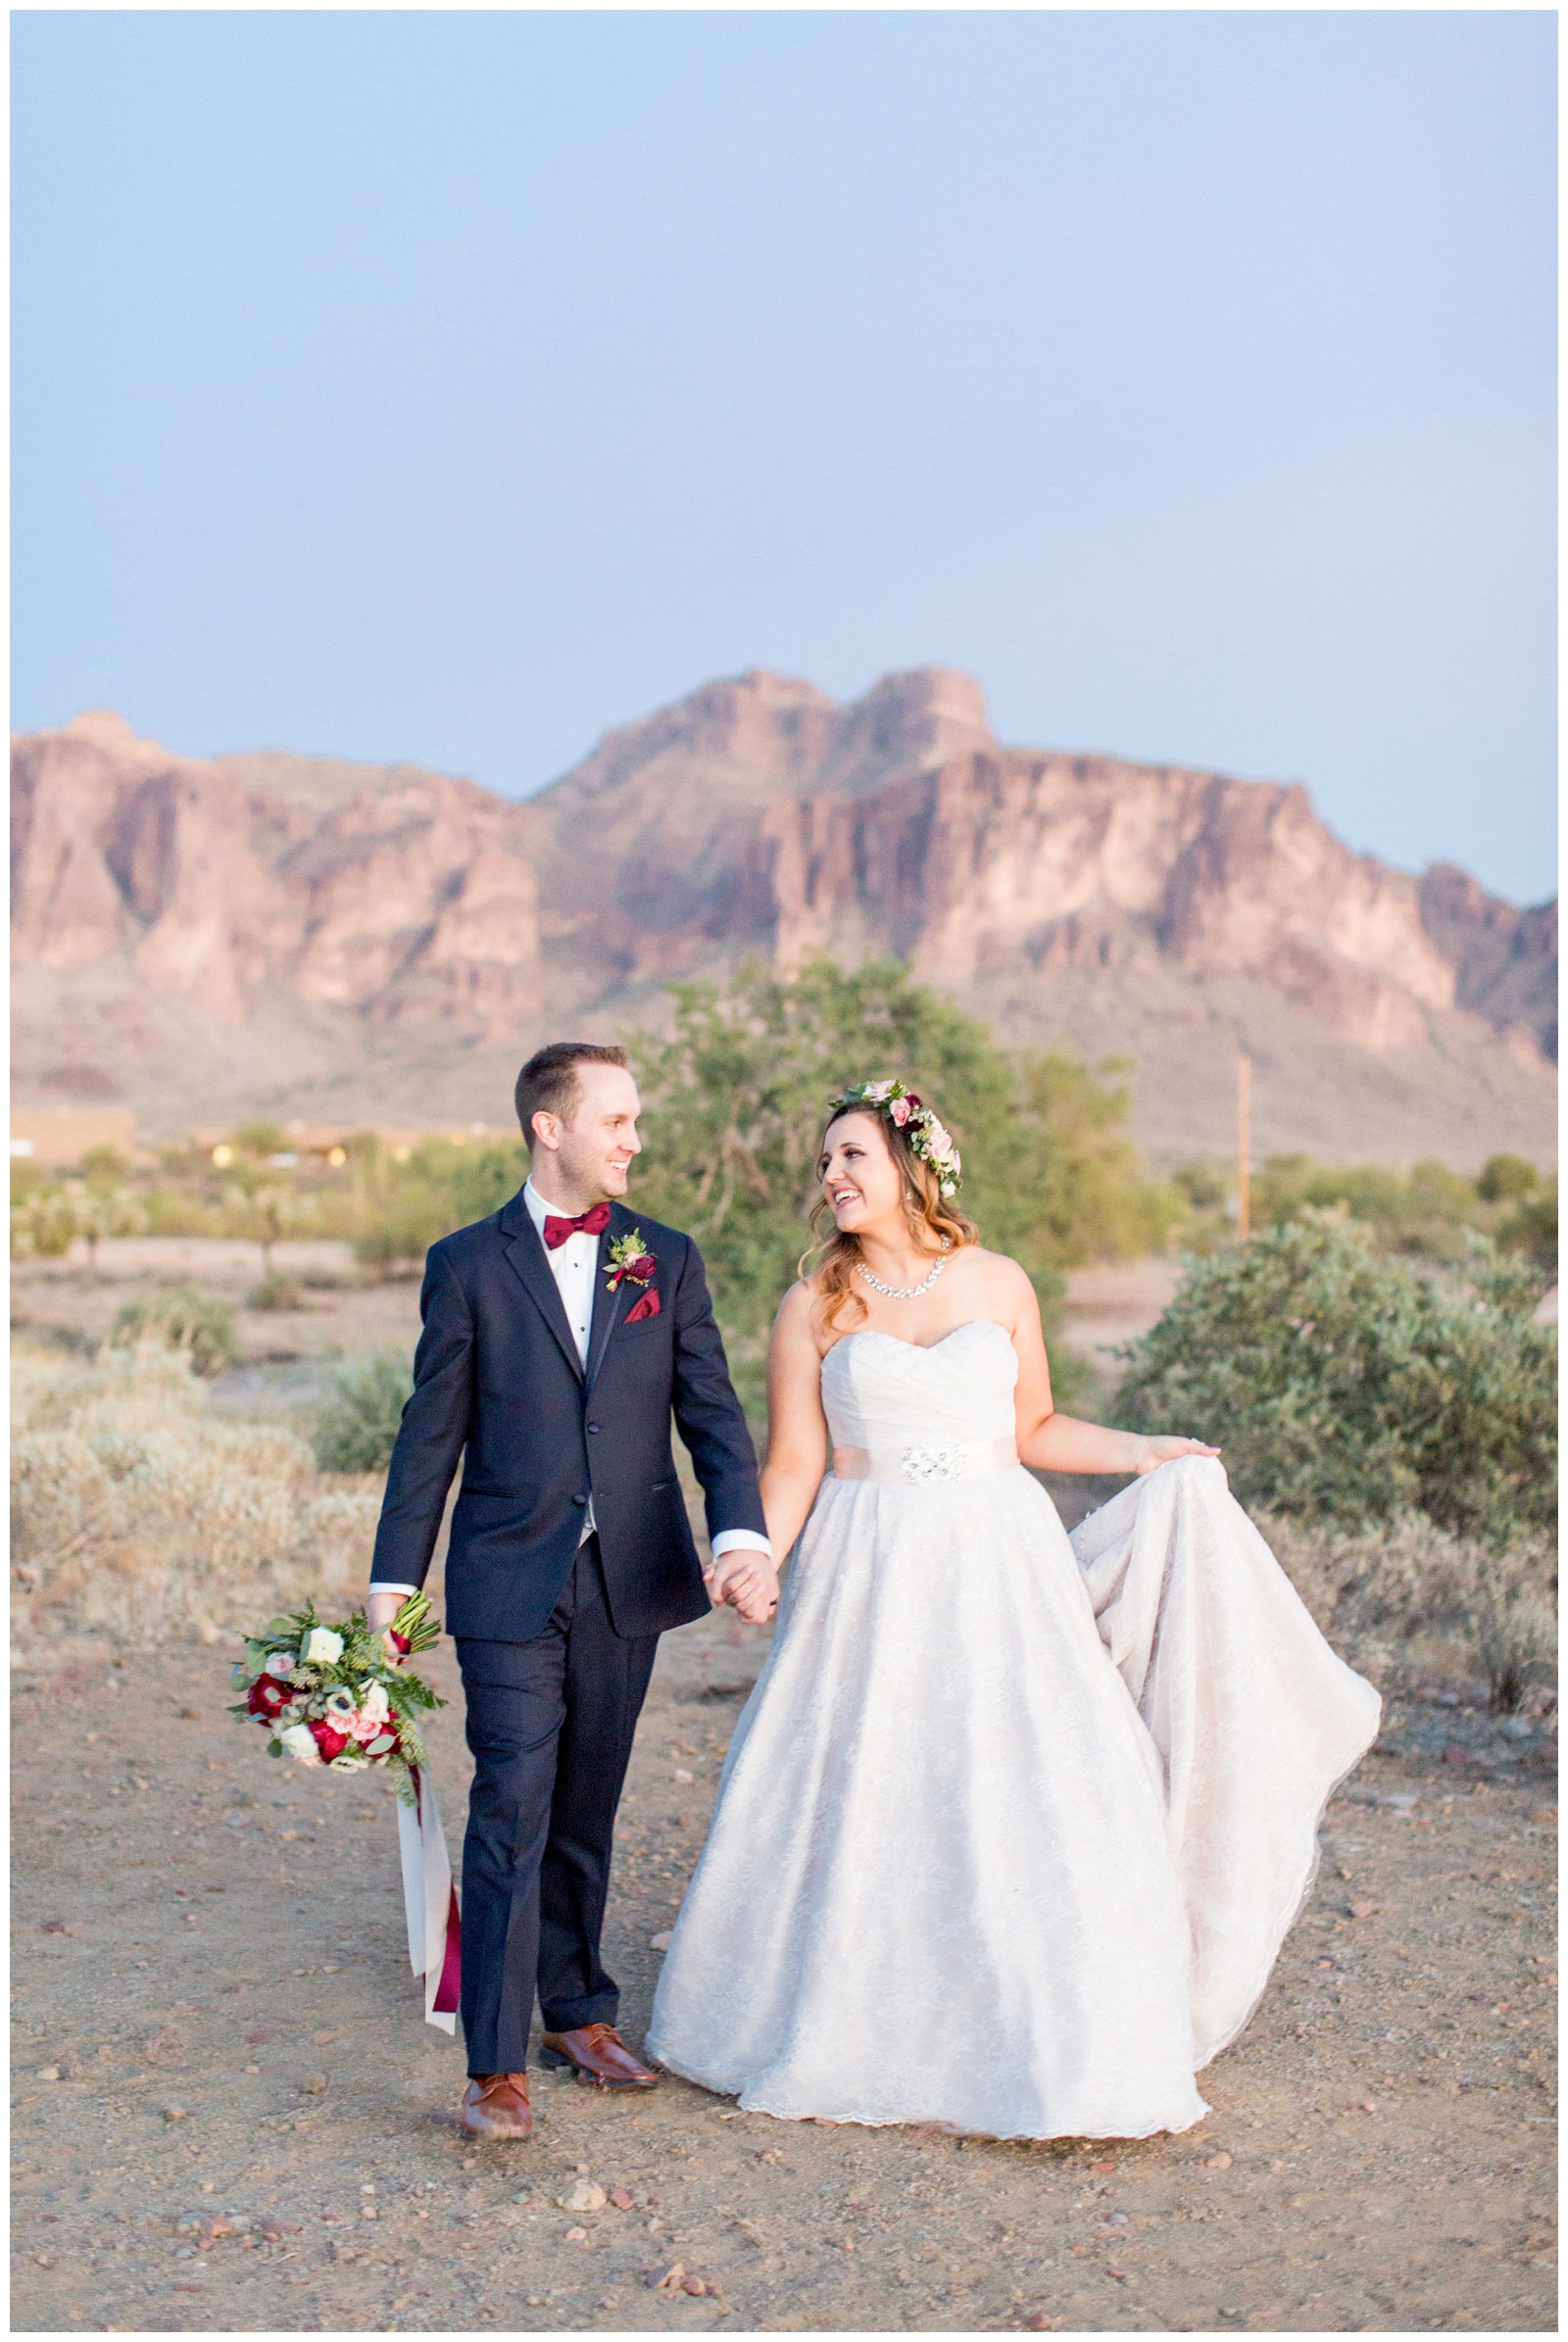 Maroon and blush pink wedding, sot in AZ Desert